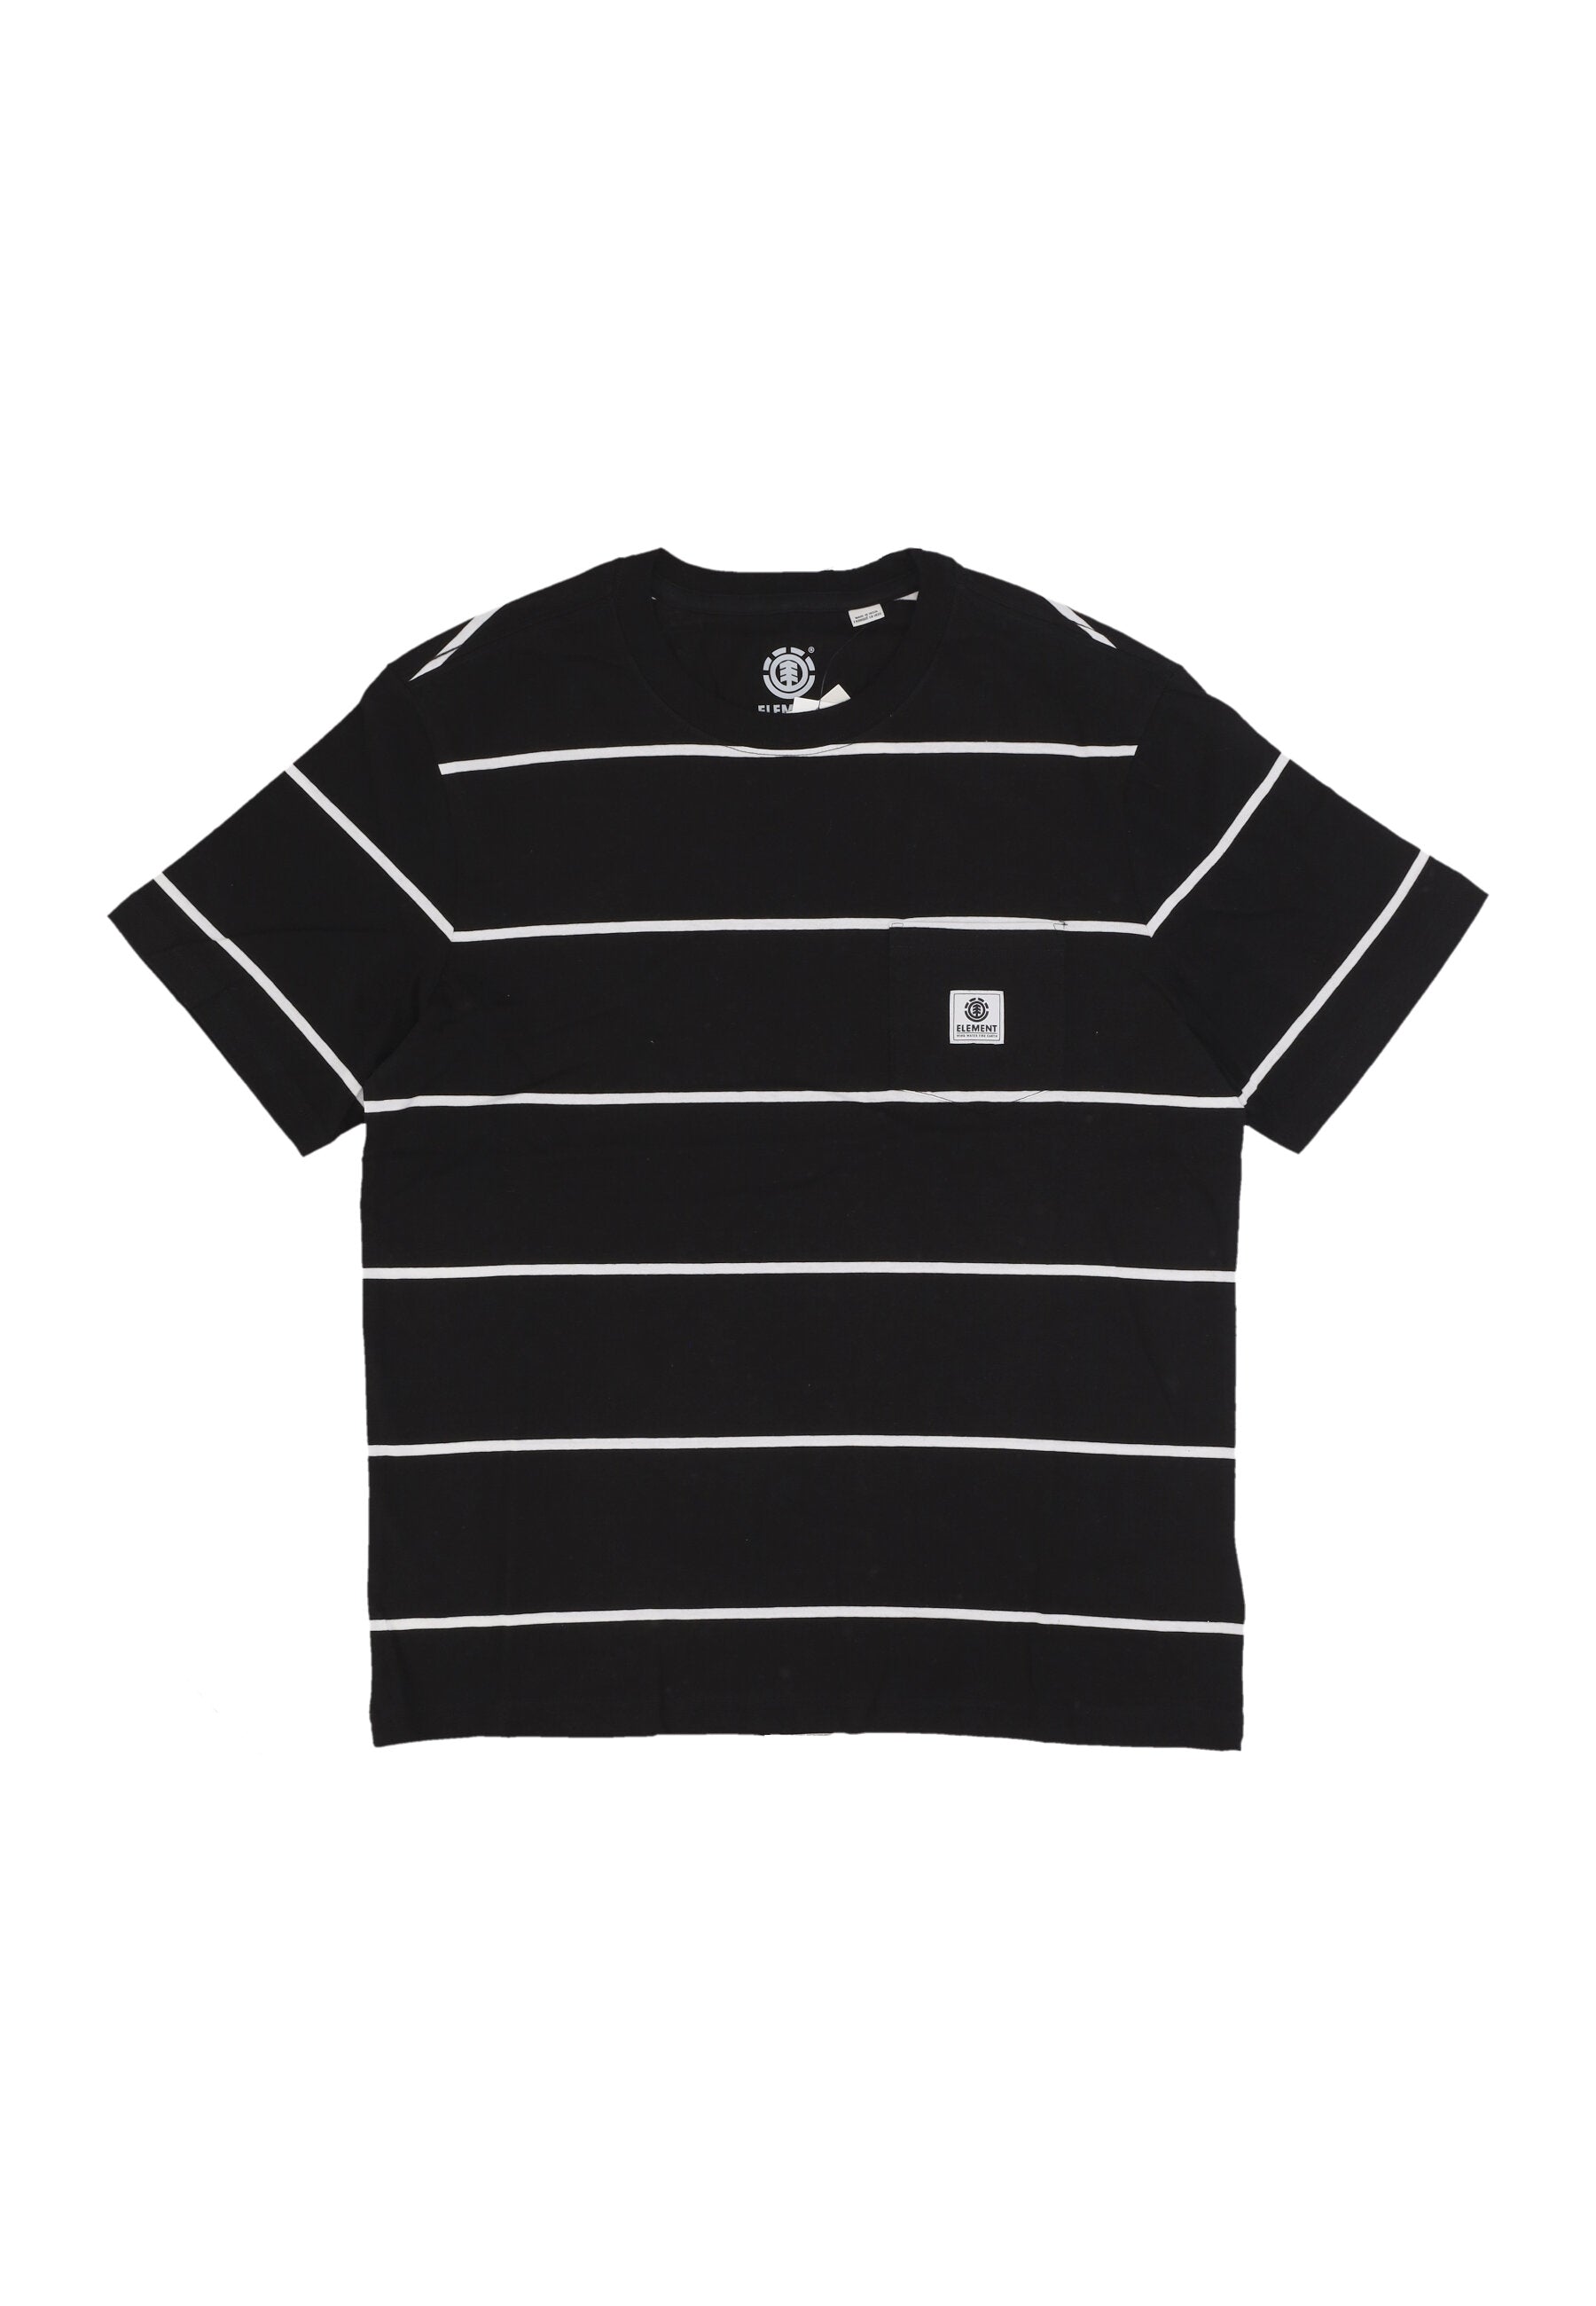 Maglietta Uomo Basic Pocket Label Tee Black/white Stripes ELYKT00116